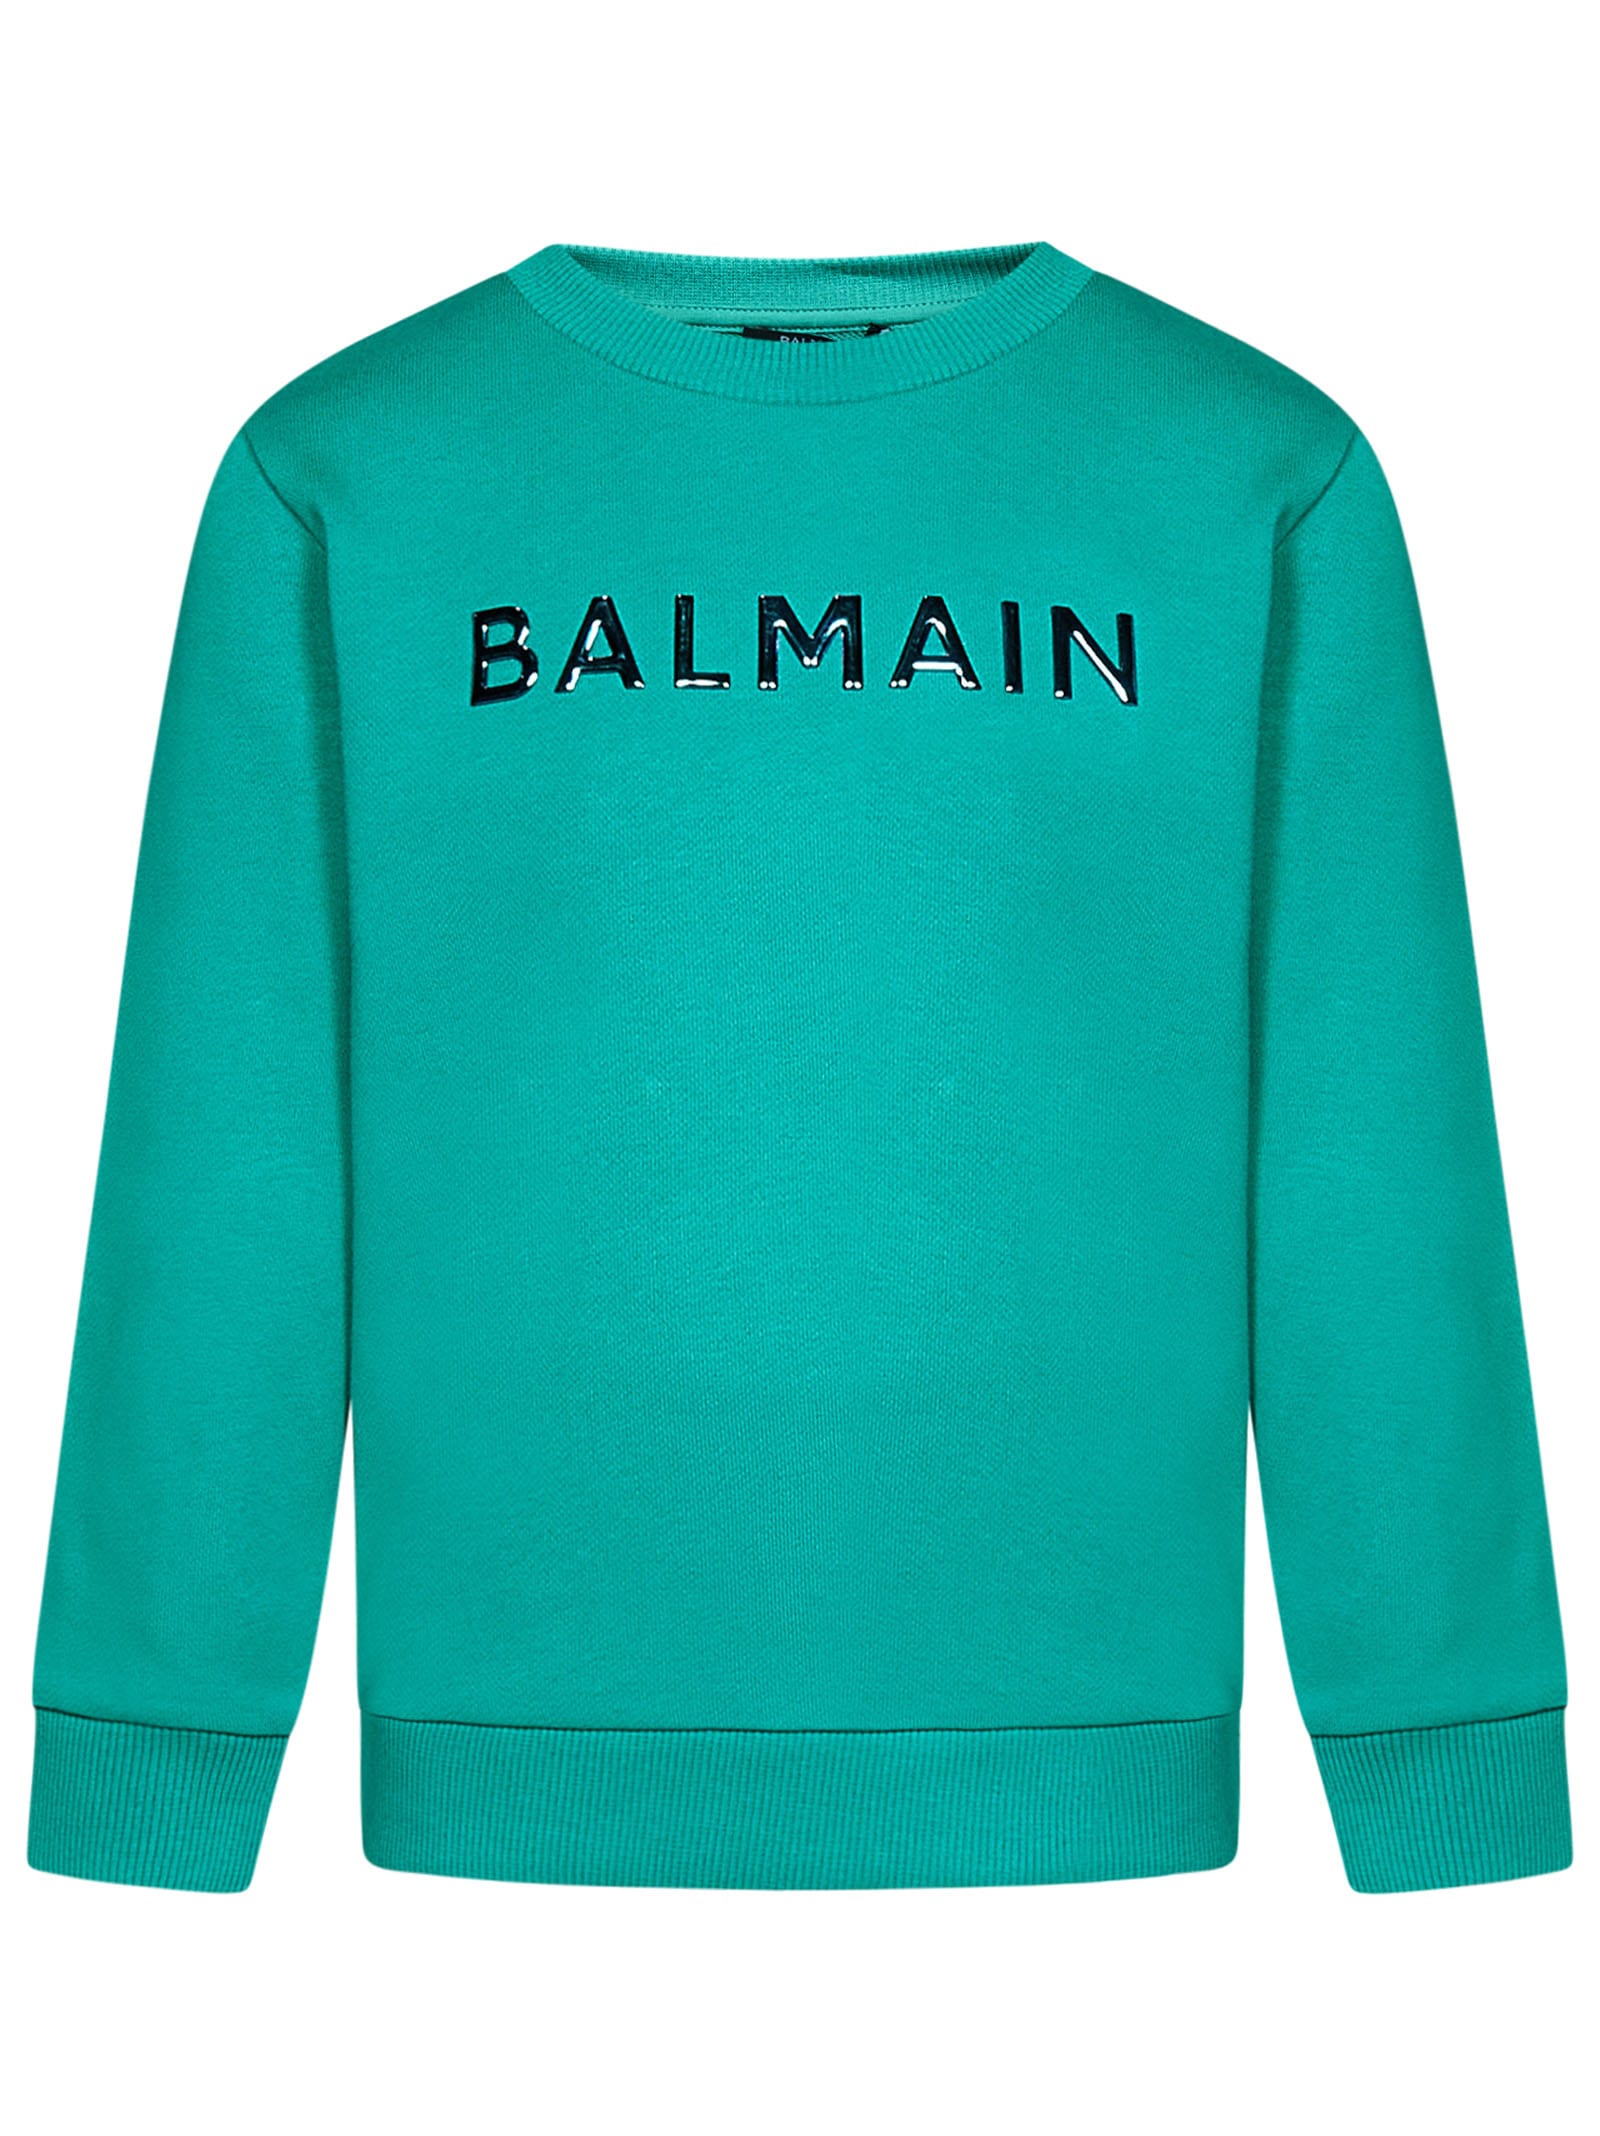 Balmain Kids' Sweatshirt In Green